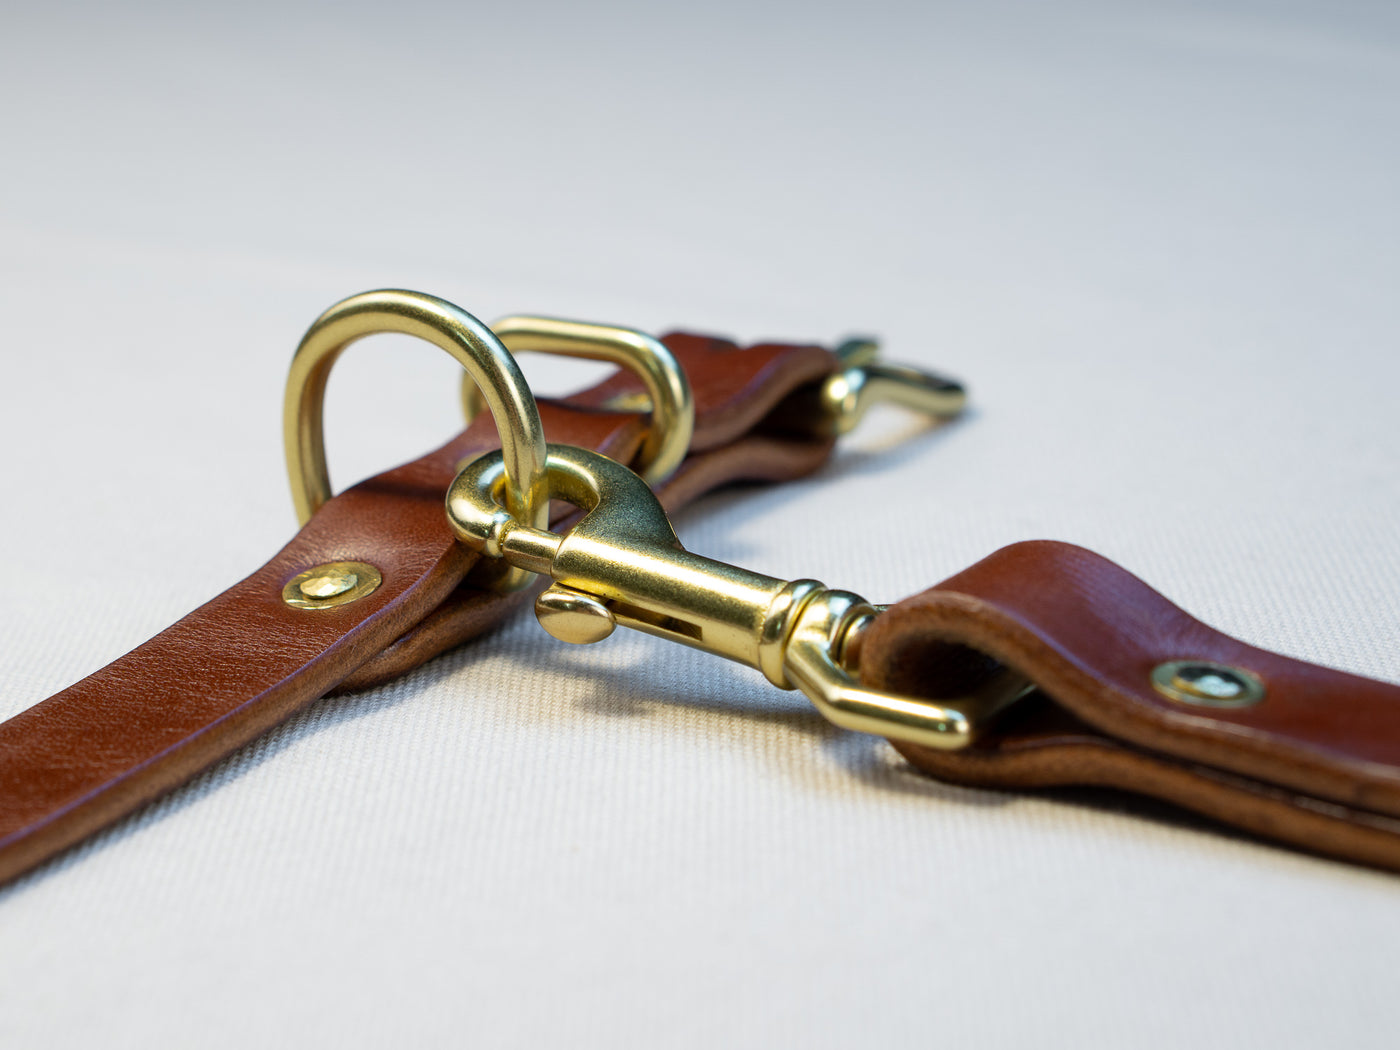 Leather Belt Dog Collar & Lead Combo - Medium Brown English Bridle Leather - Atlas Leathercraft - Handmade Australian Leather Goods